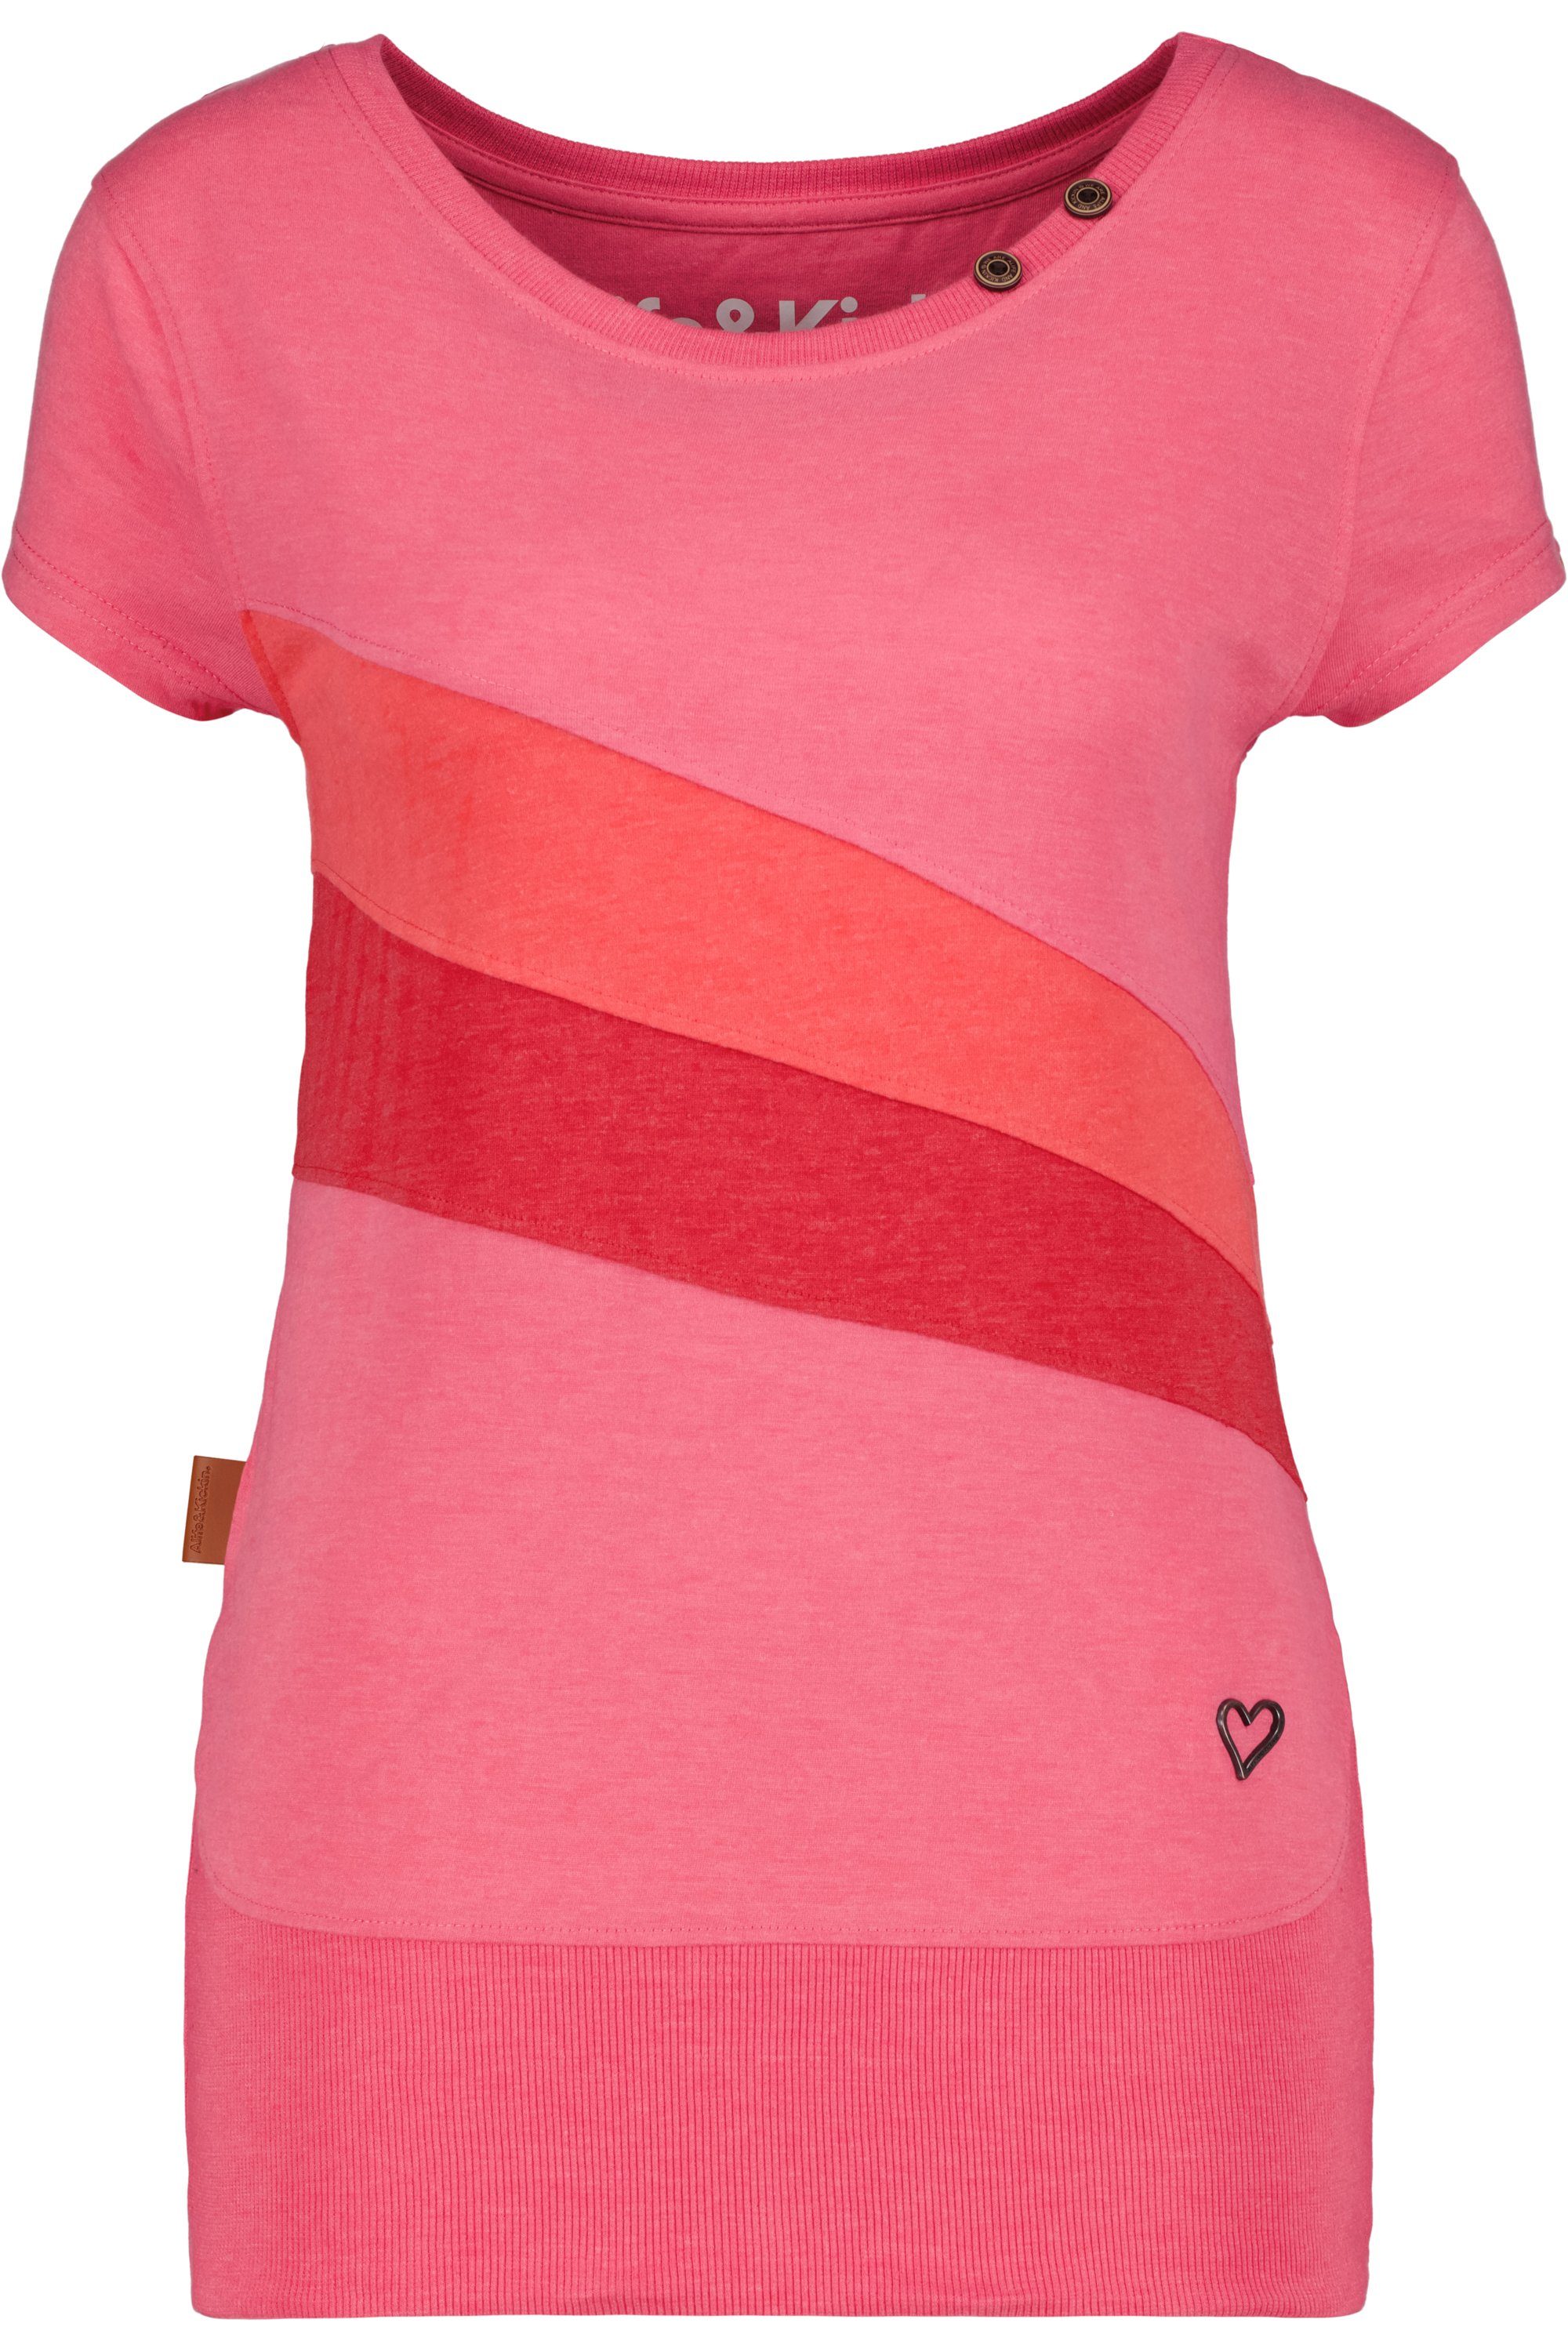 Alife & Kickin CleaAK Shirt Damen T-Shirt T-Shirt flamingo